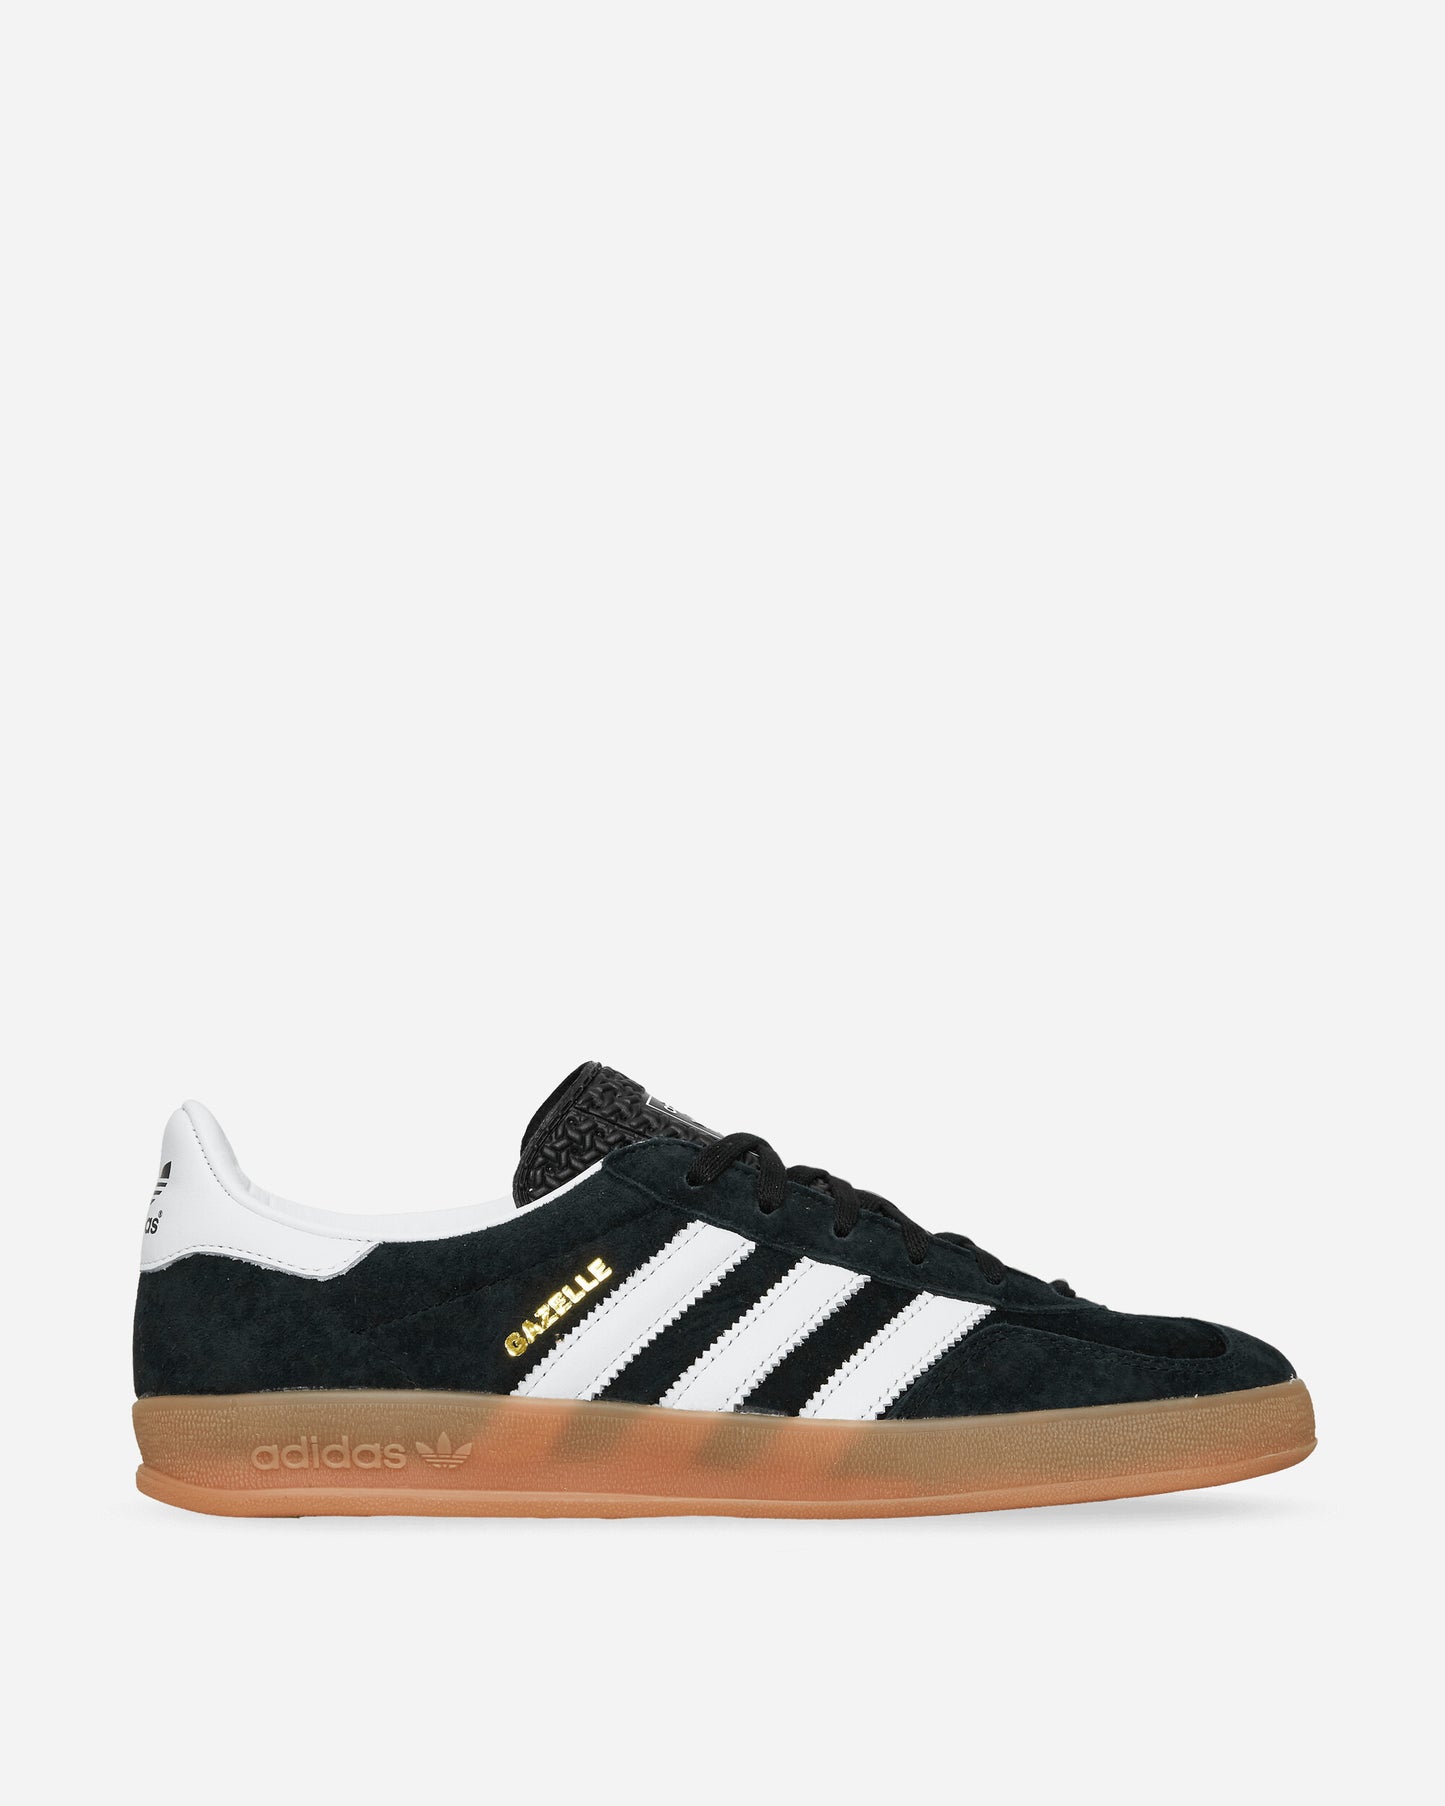 adidas Gazelle Indoor Black/White Sneakers Low H06259 001